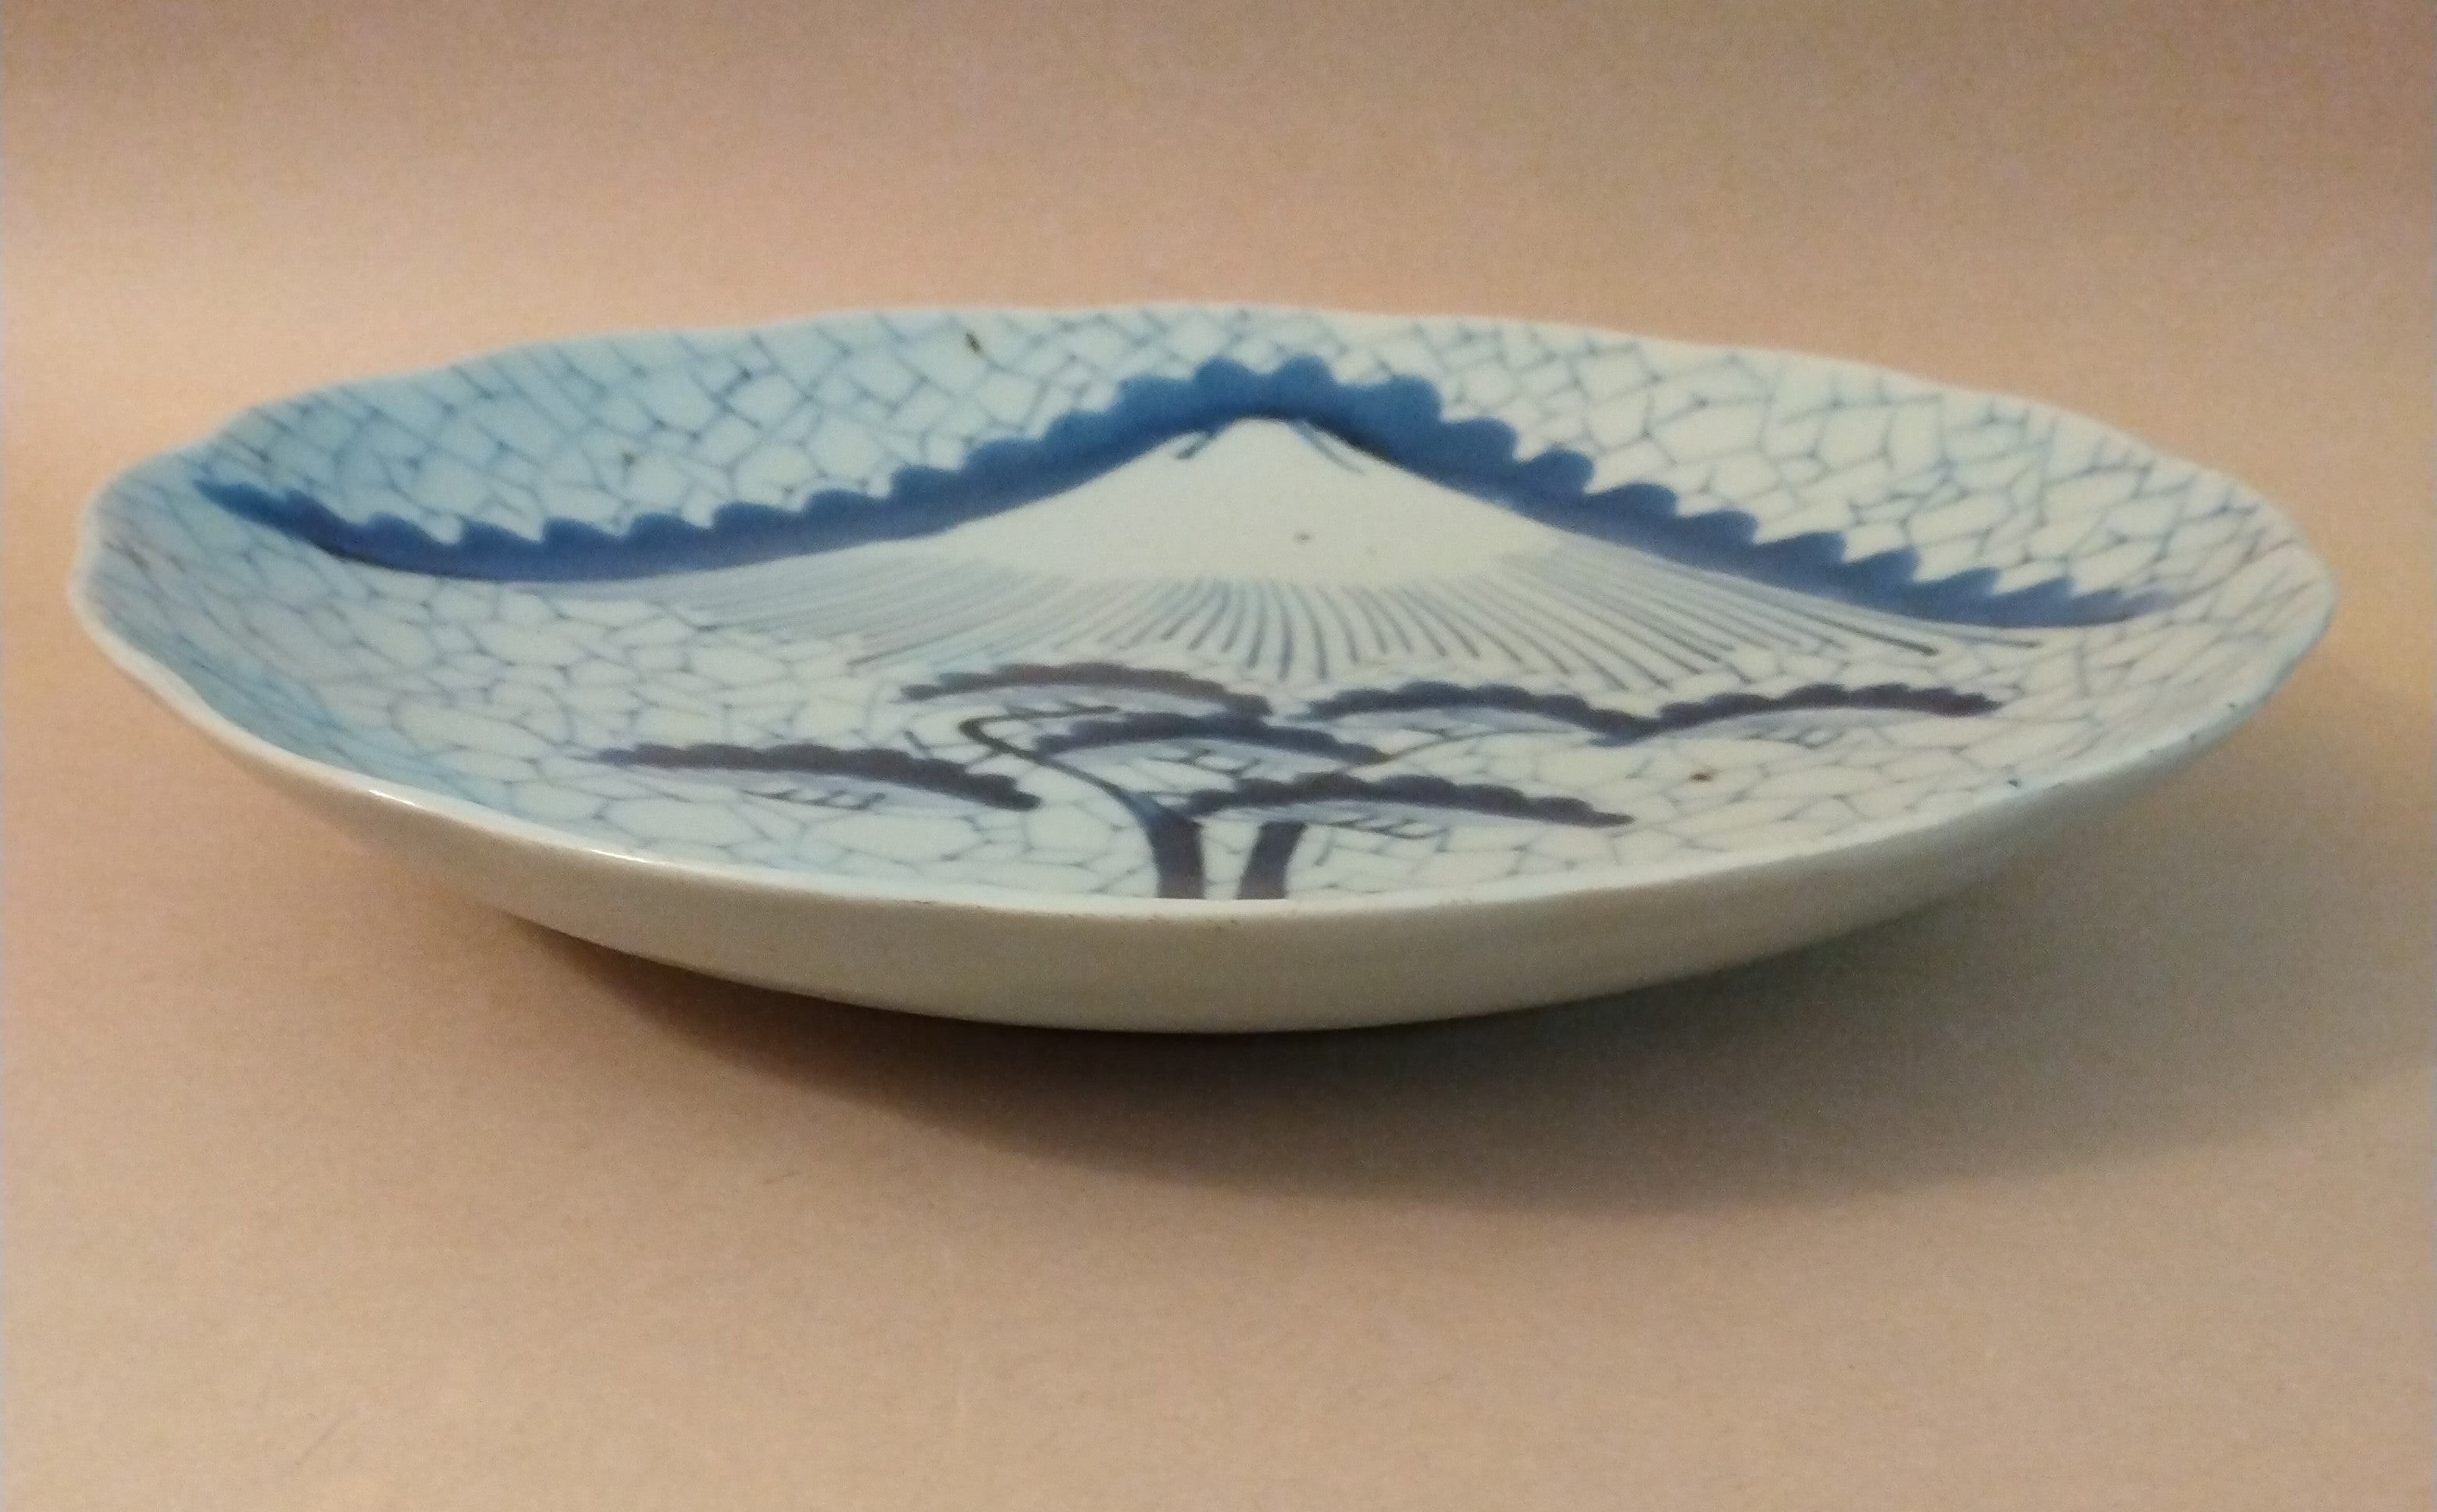 Arita-Yaki Plate, with "Fuji-Matsu" (Mount Fuji & Pine) Motif, Early 20th C. (Meiji Era 1868-1912 to Taisho eEa 1912-1926)